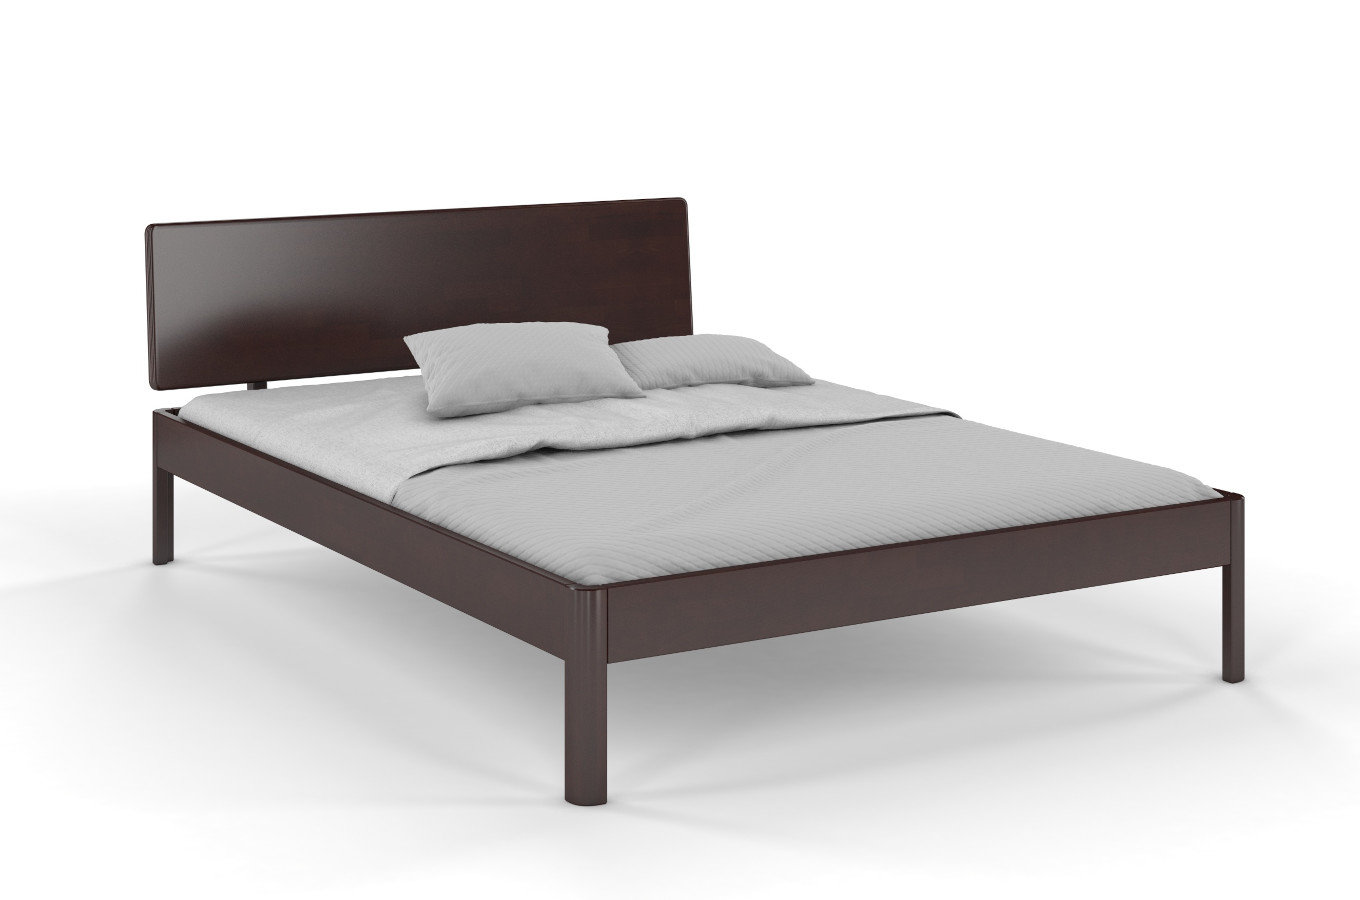  Łóżko drewniane bukowe Visby AMMER / 160x200 cm, kolor palisander